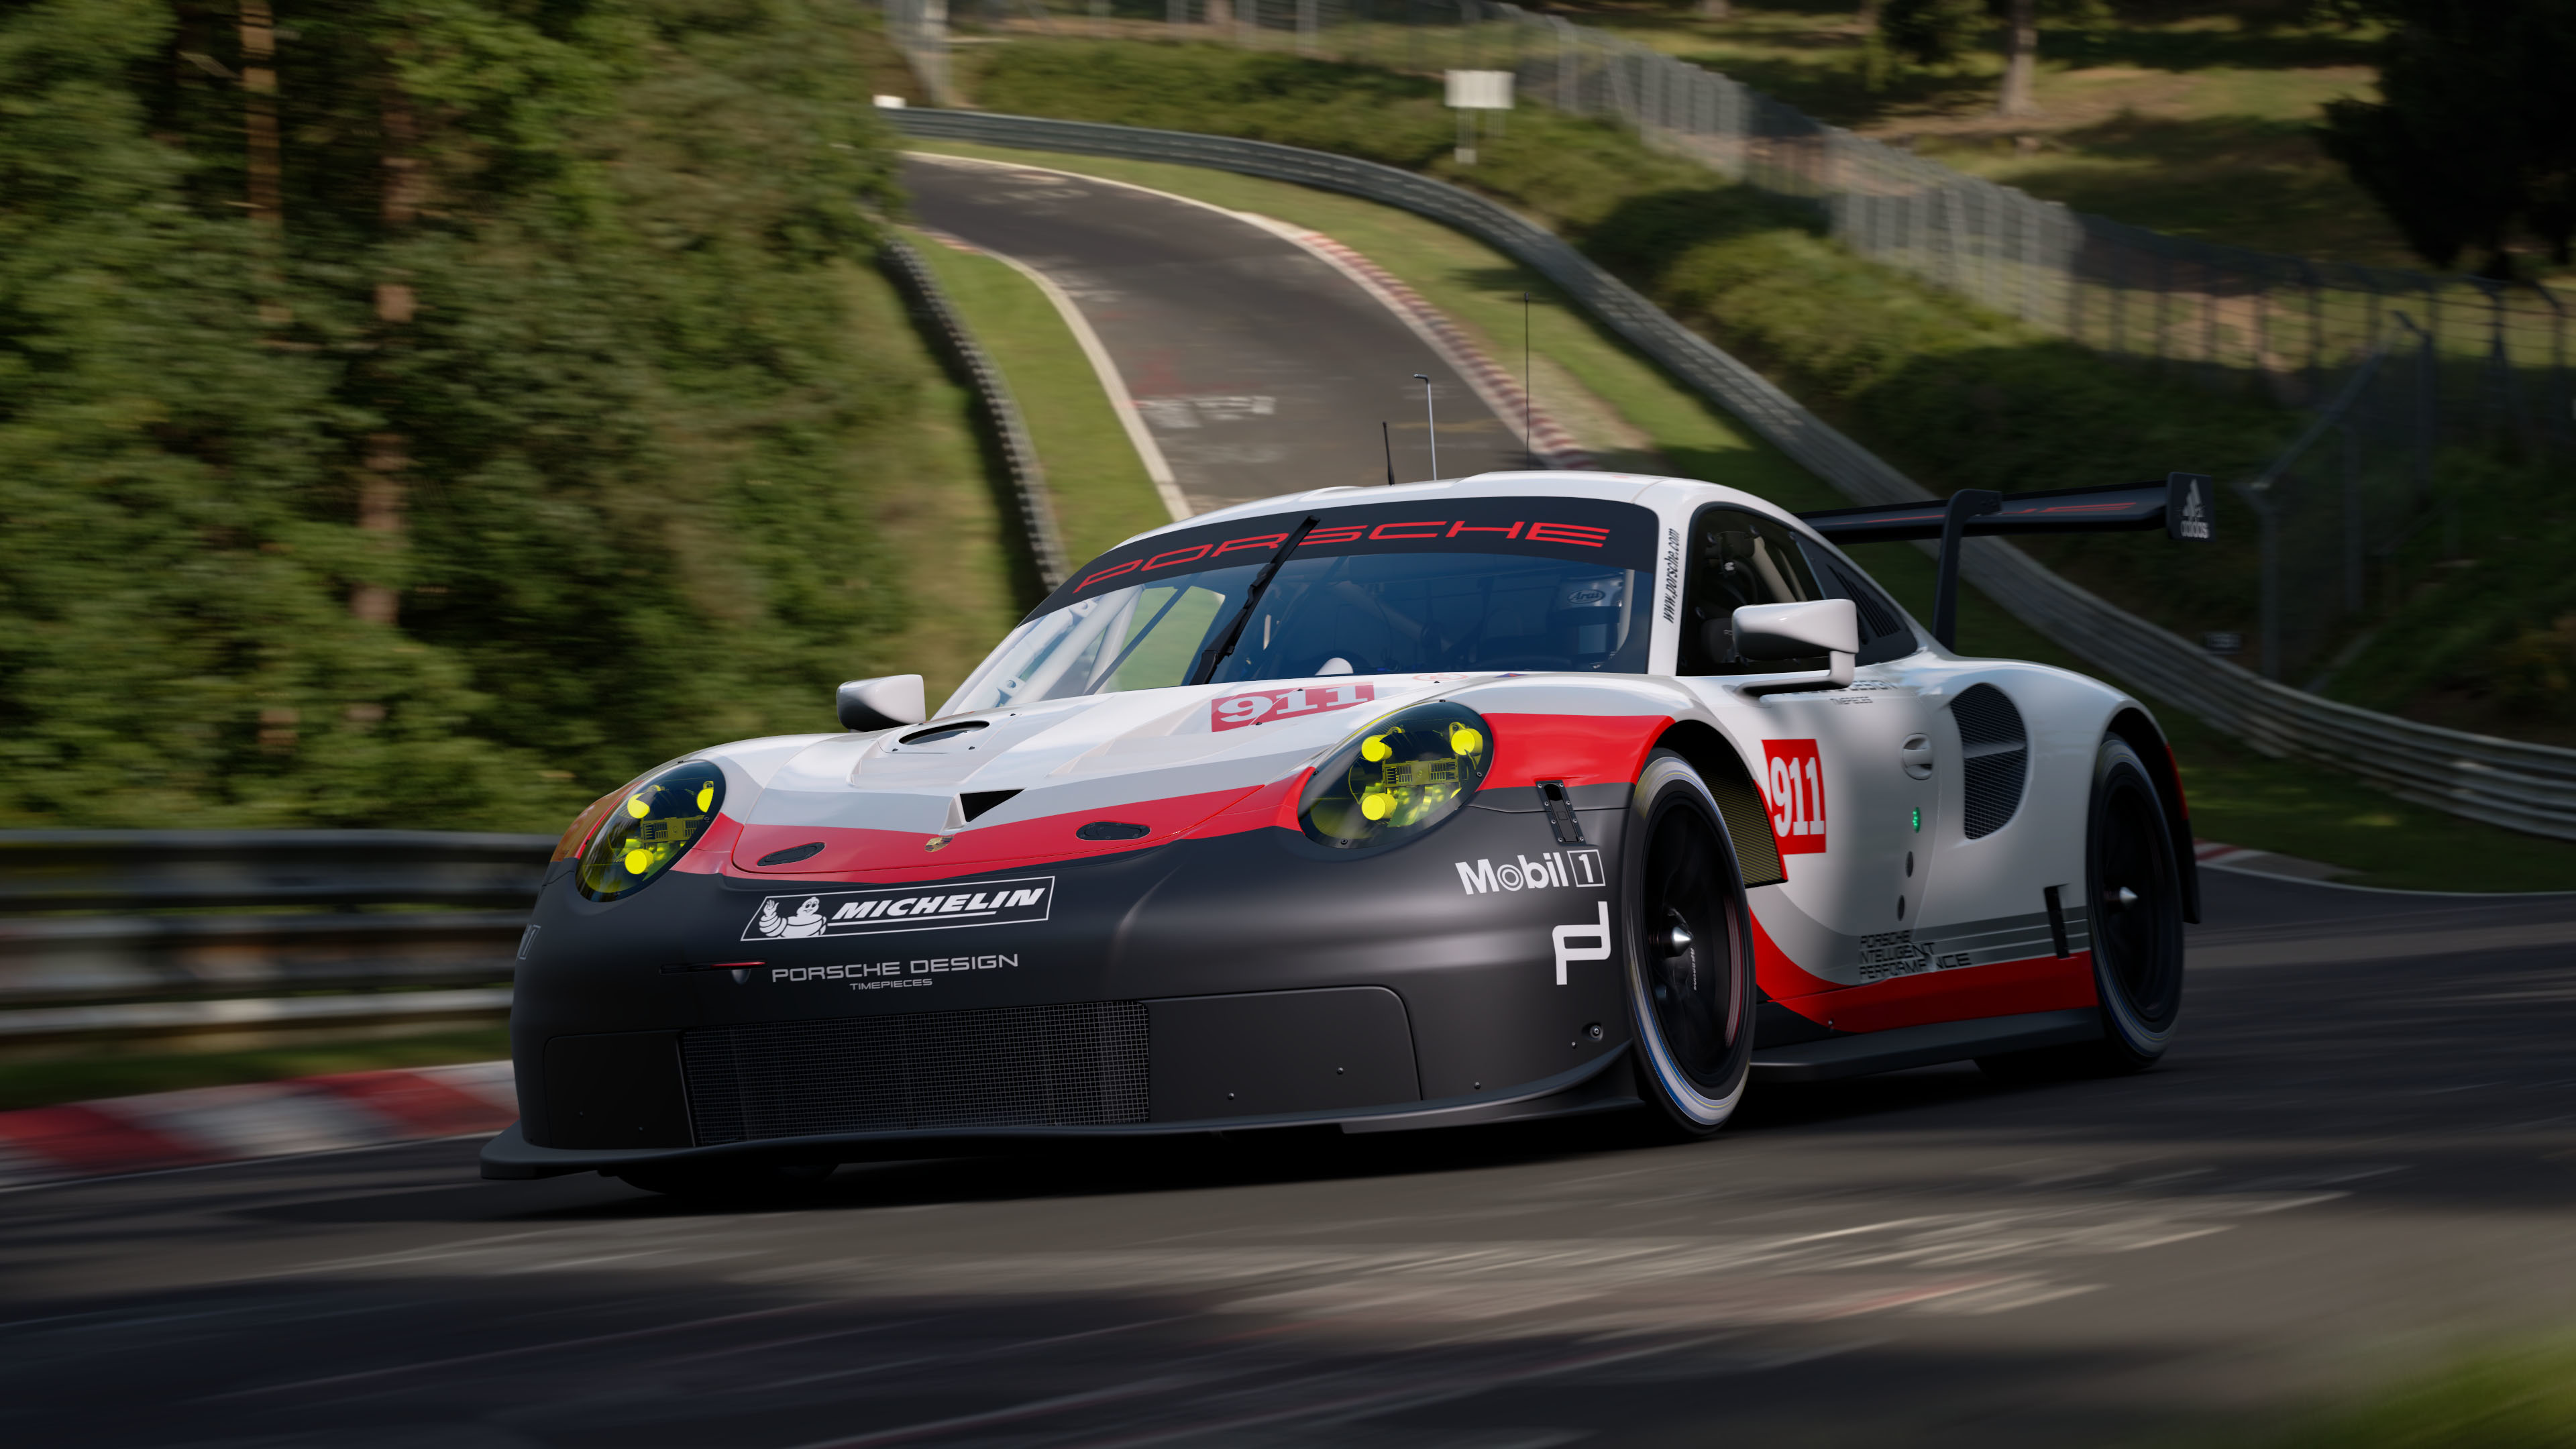 Grand turismo sports. Гран Туризмо спорт Порше. Porsche 911 gt Sport. Порше 911 Гран Туризмо. Porsche 911 Gran Turismo Sport.